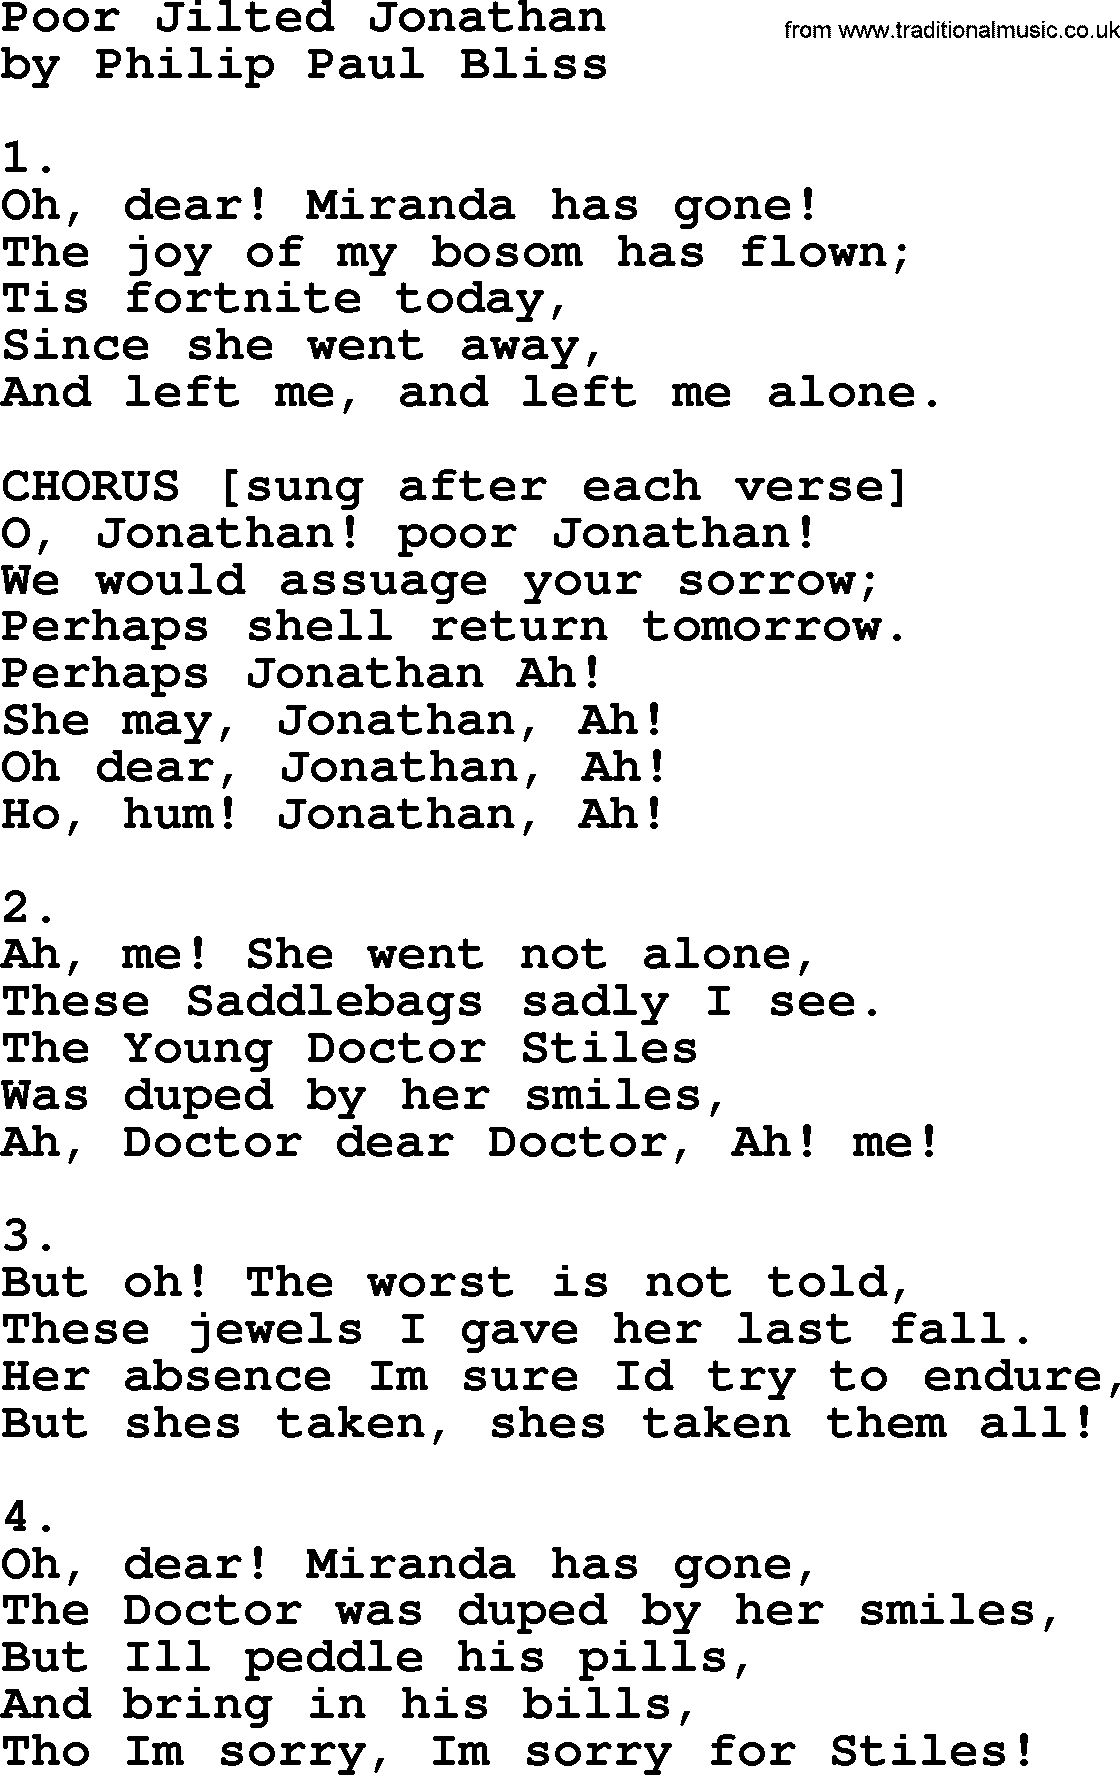 Philip Bliss Song: Poor Jilted Jonathan, lyrics